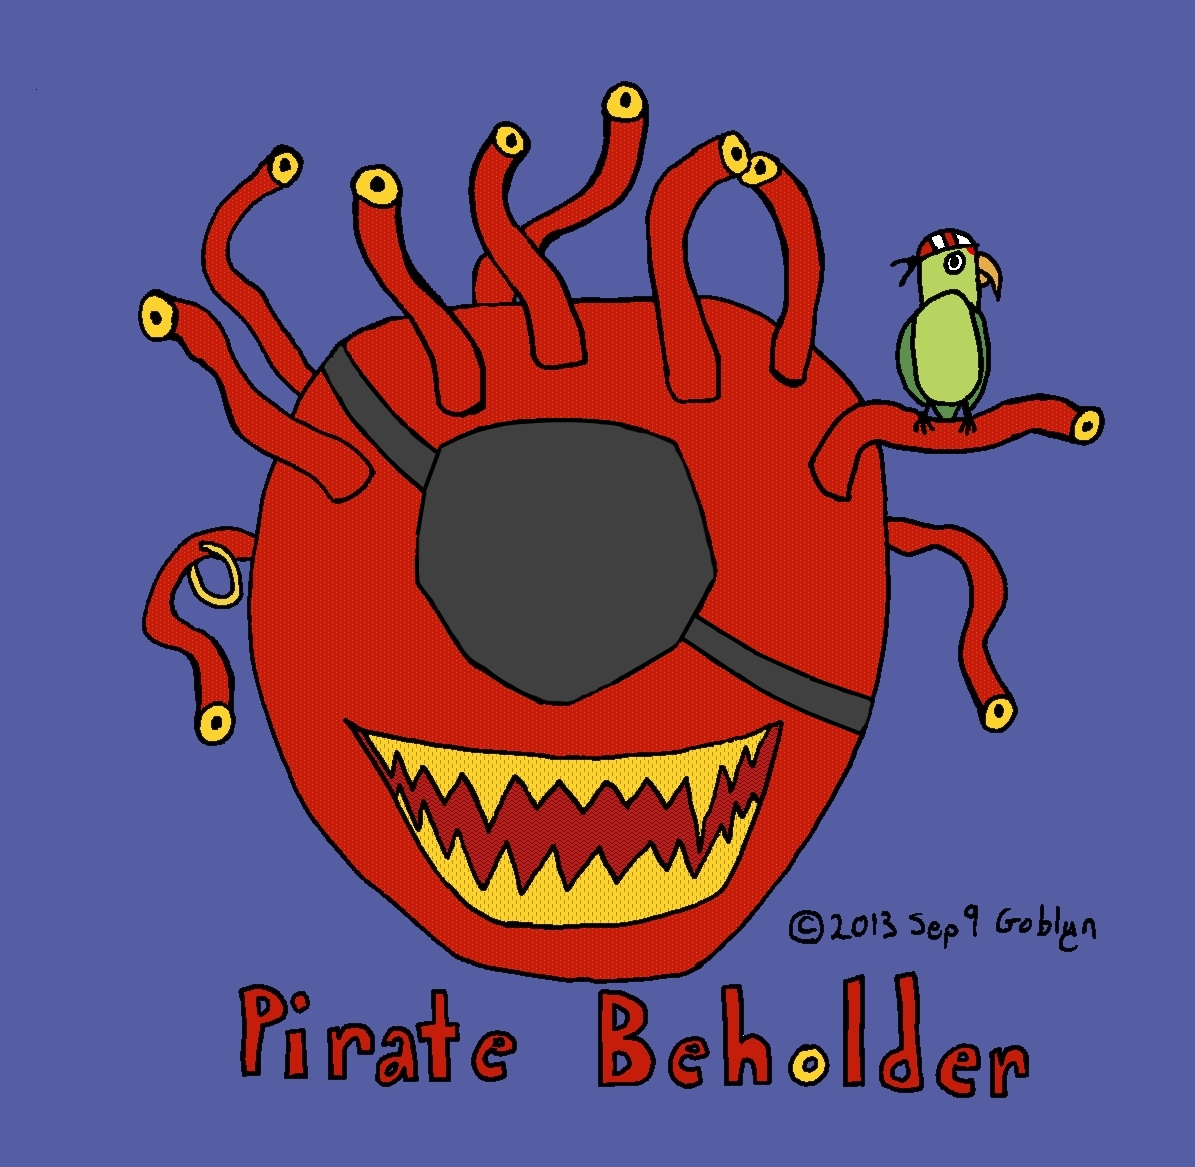 Pirate Beholder